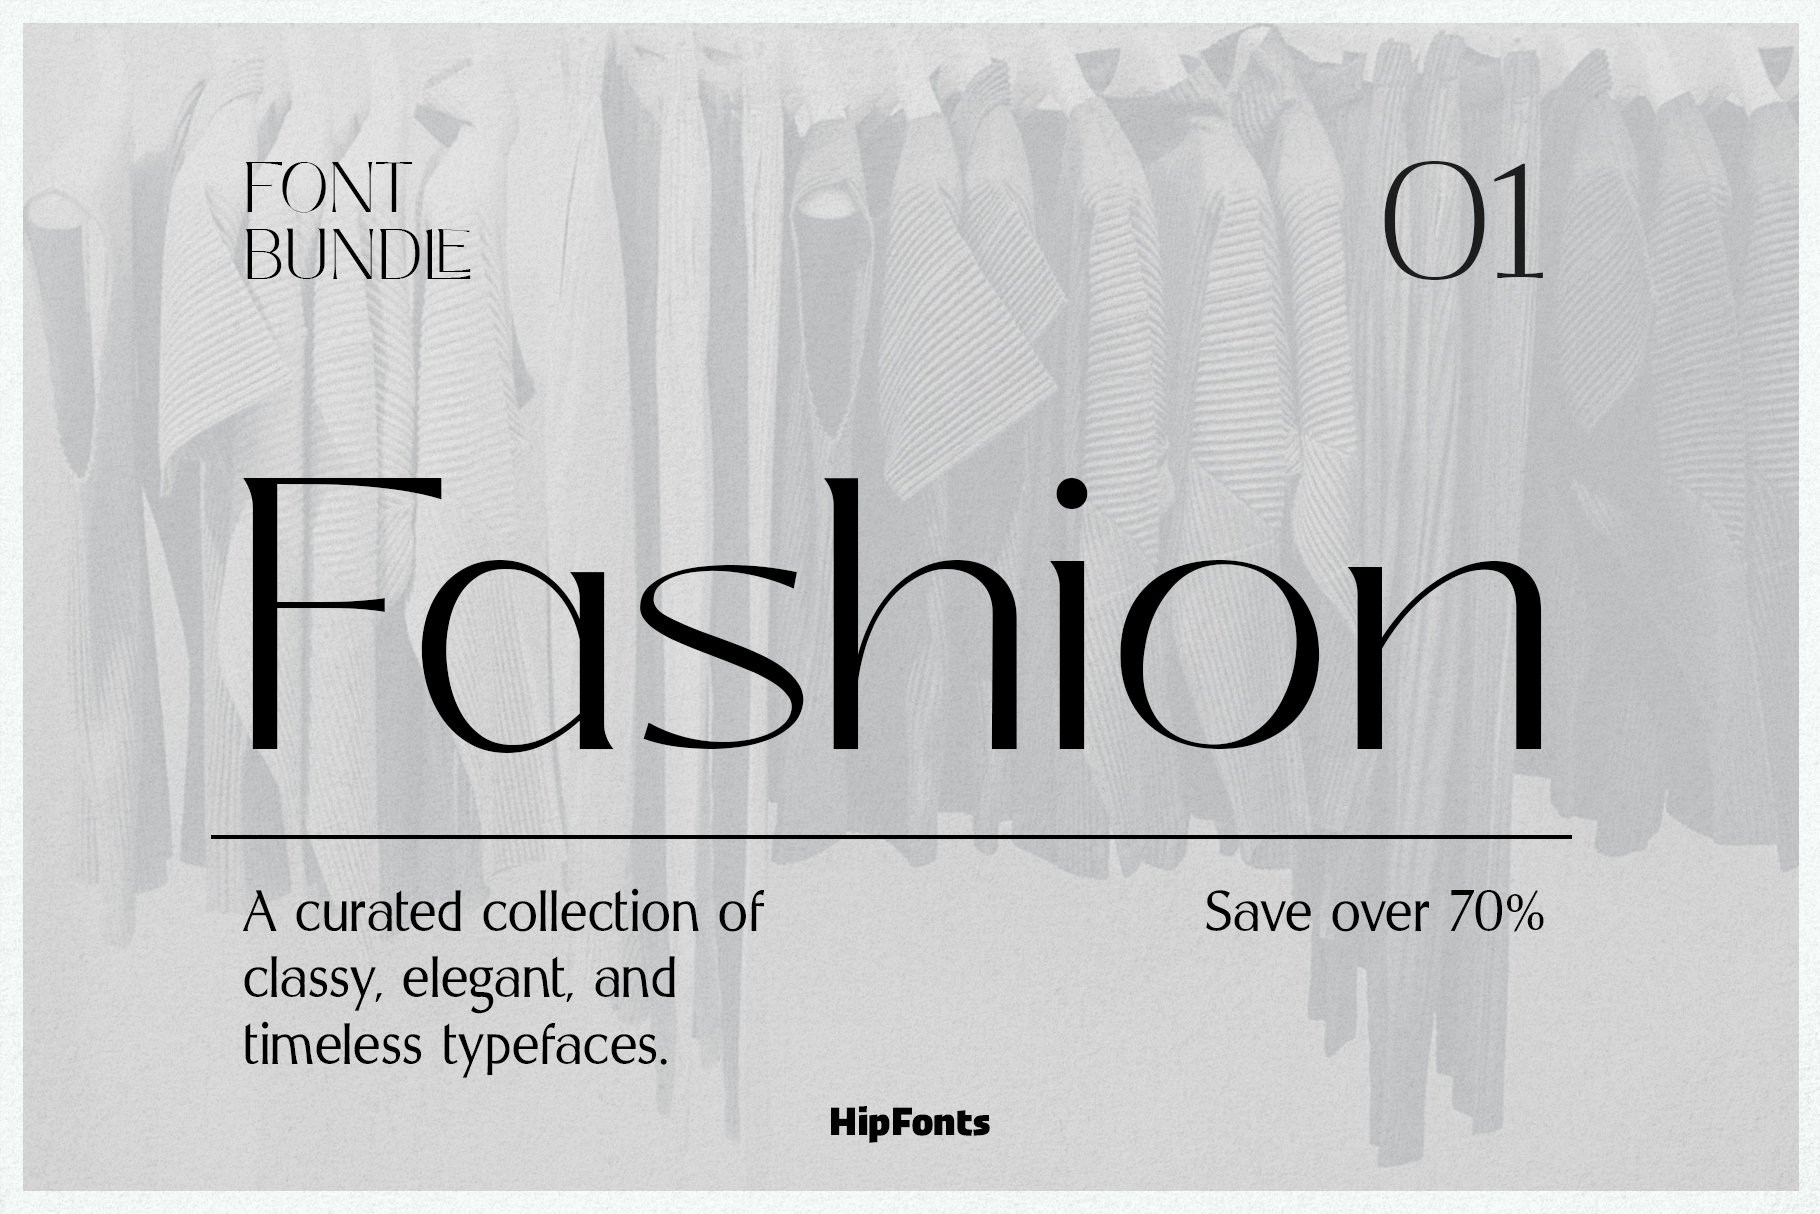 The Fashion Font Bundle (18 Fonts)cover image.